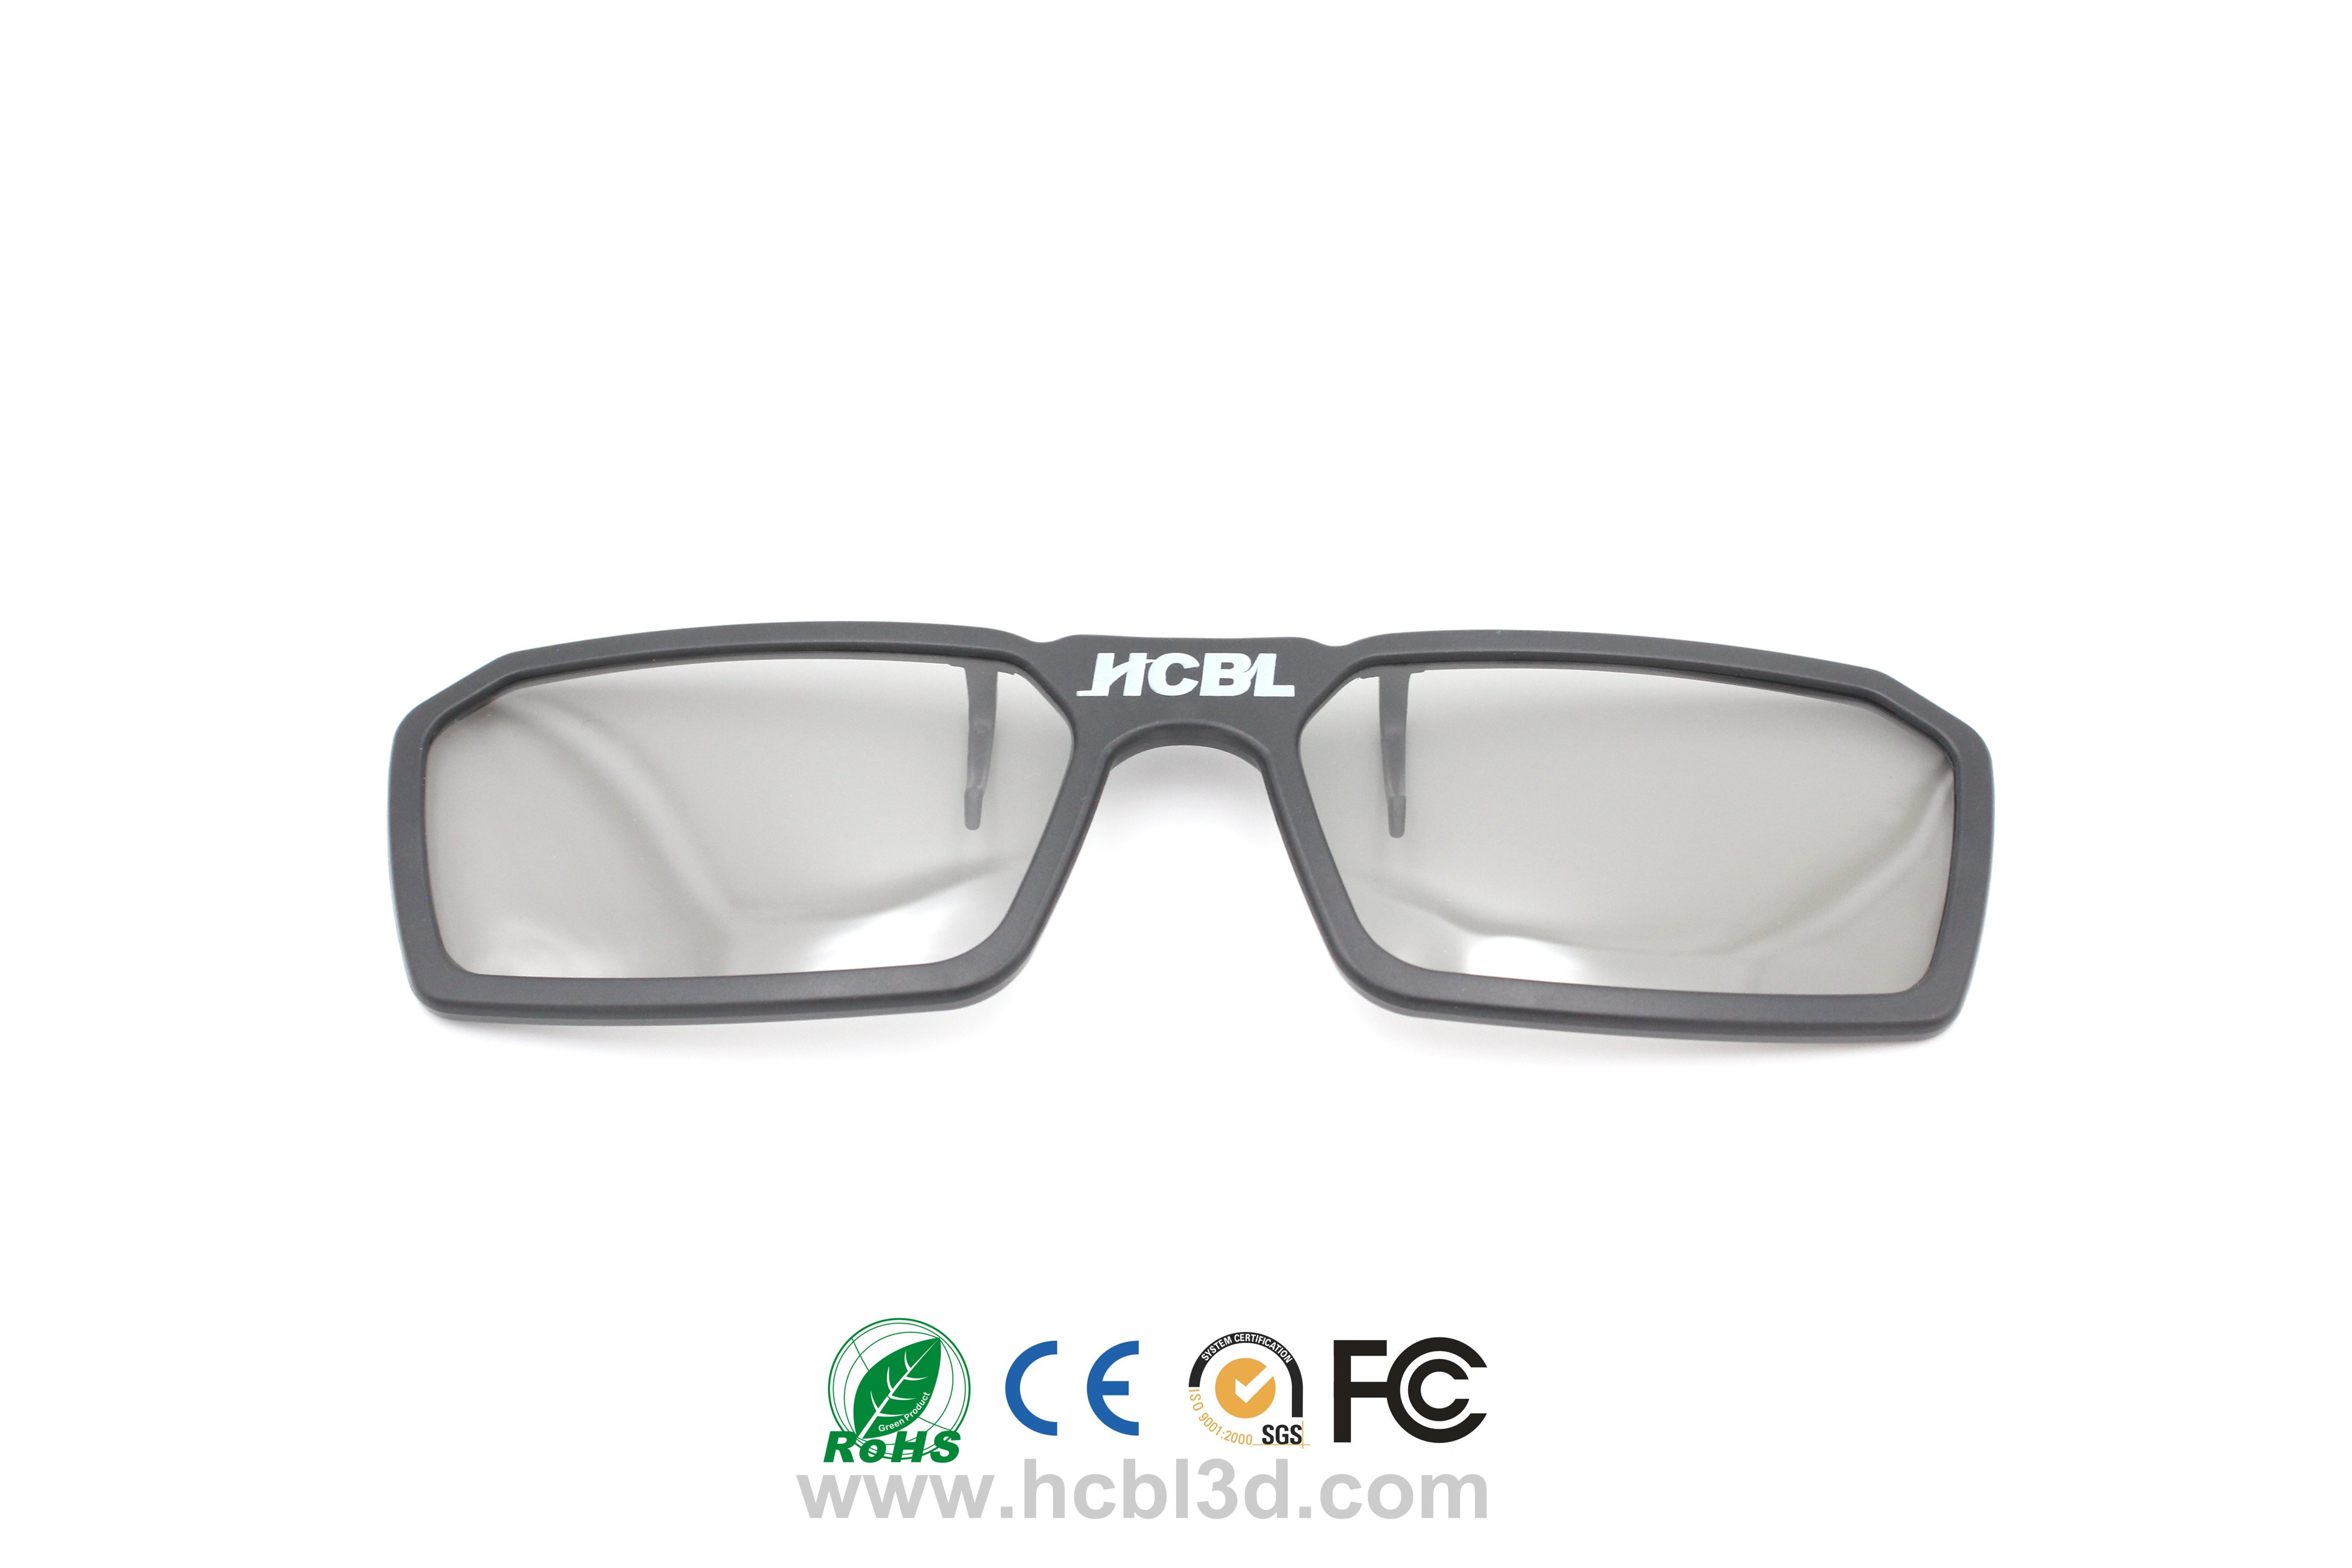 Gafas 3D miópicas Con lentes polarizadas circulares / lineales / Gafas 3D desechables / reciclables Pasivas